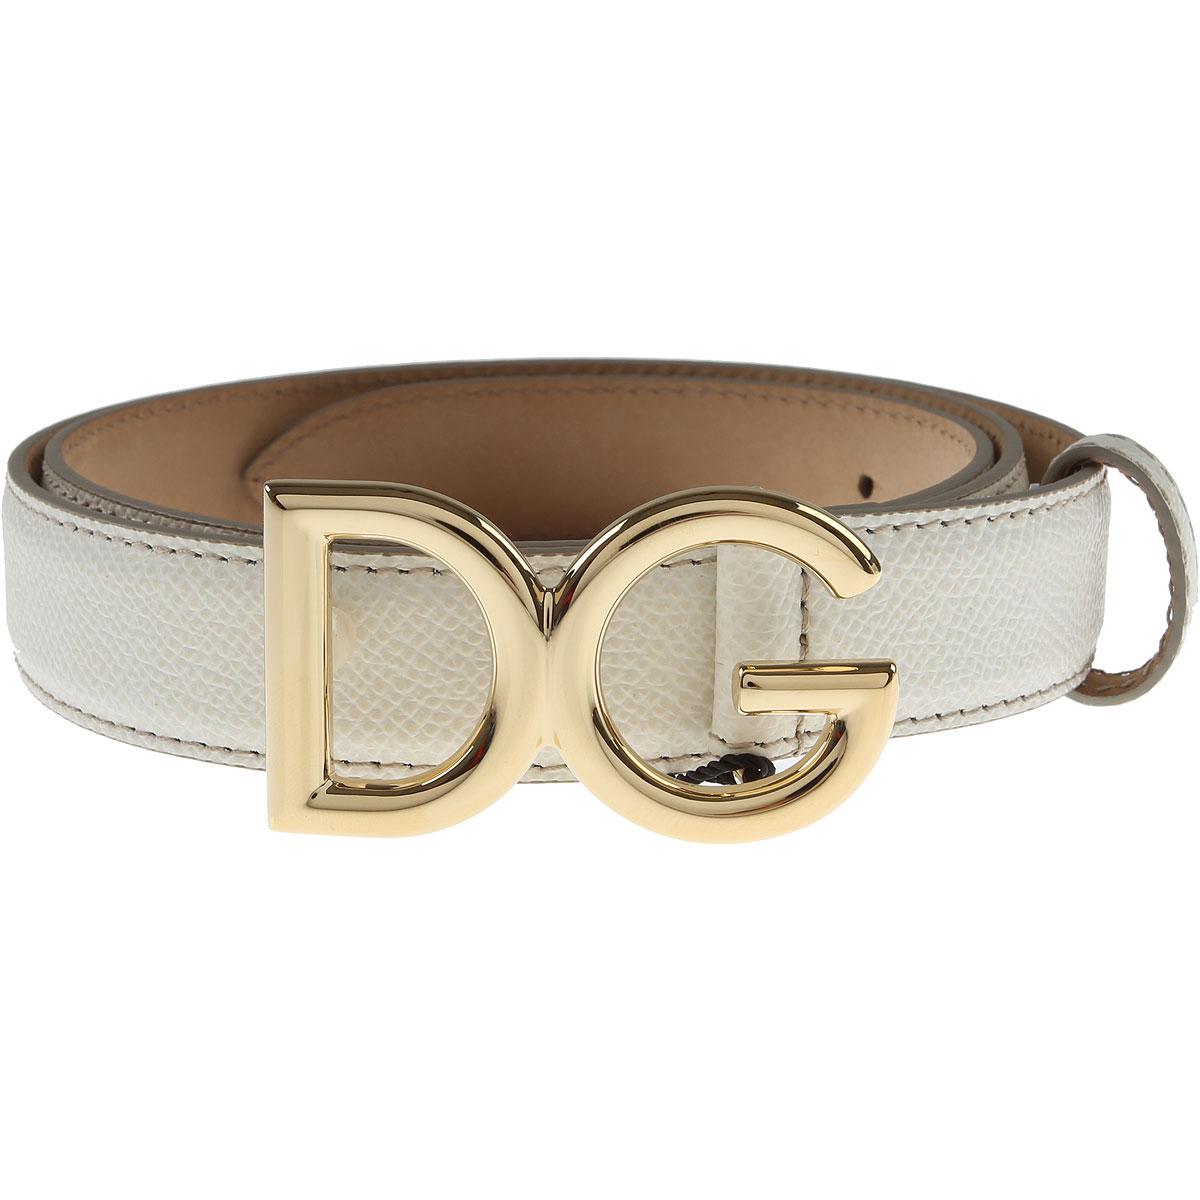 Dolce \u0026 Gabbana Leather Womens Belts in 